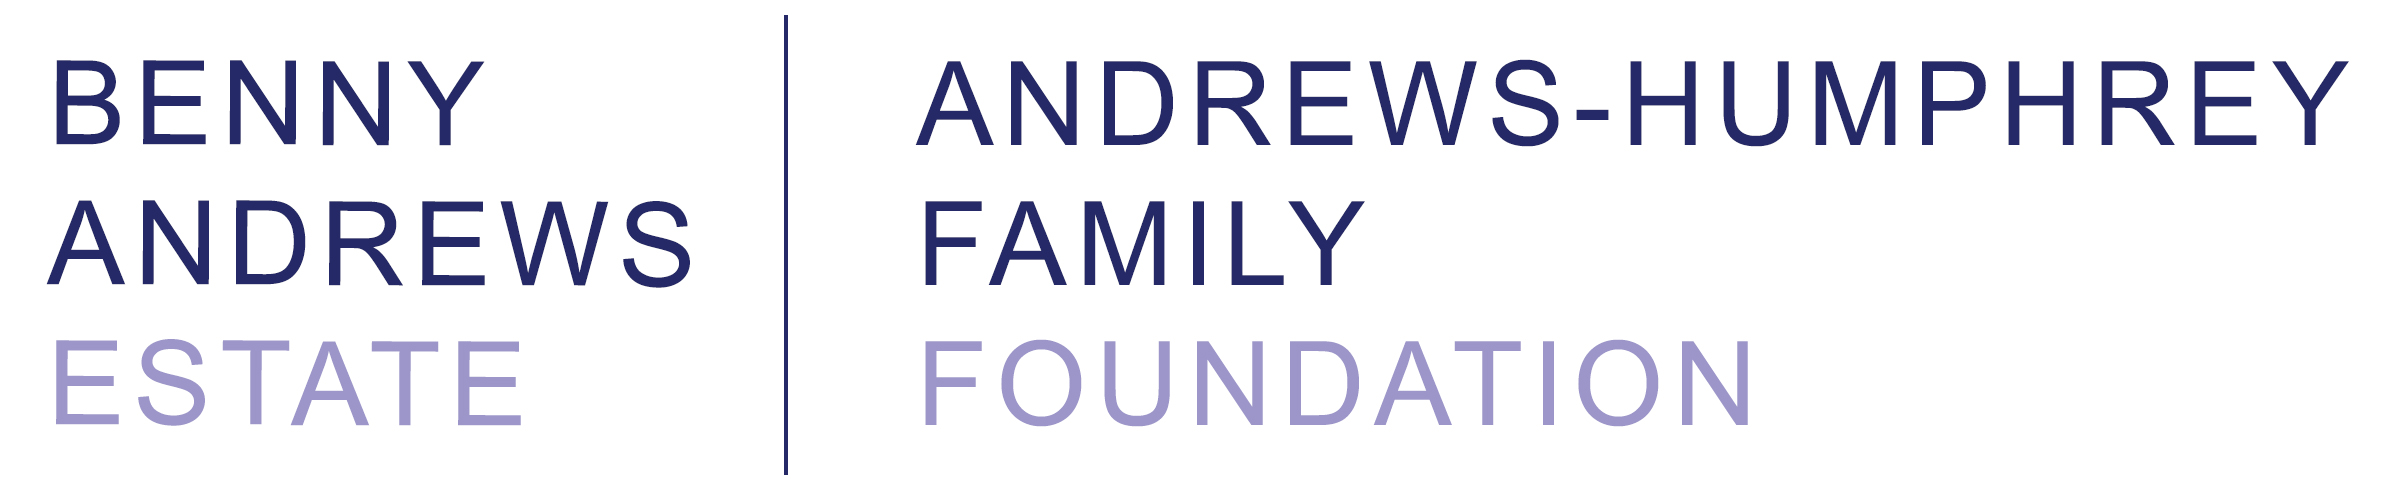 Benny Andrews Estate and the Andrews-Humphrey Family Foundation Logo